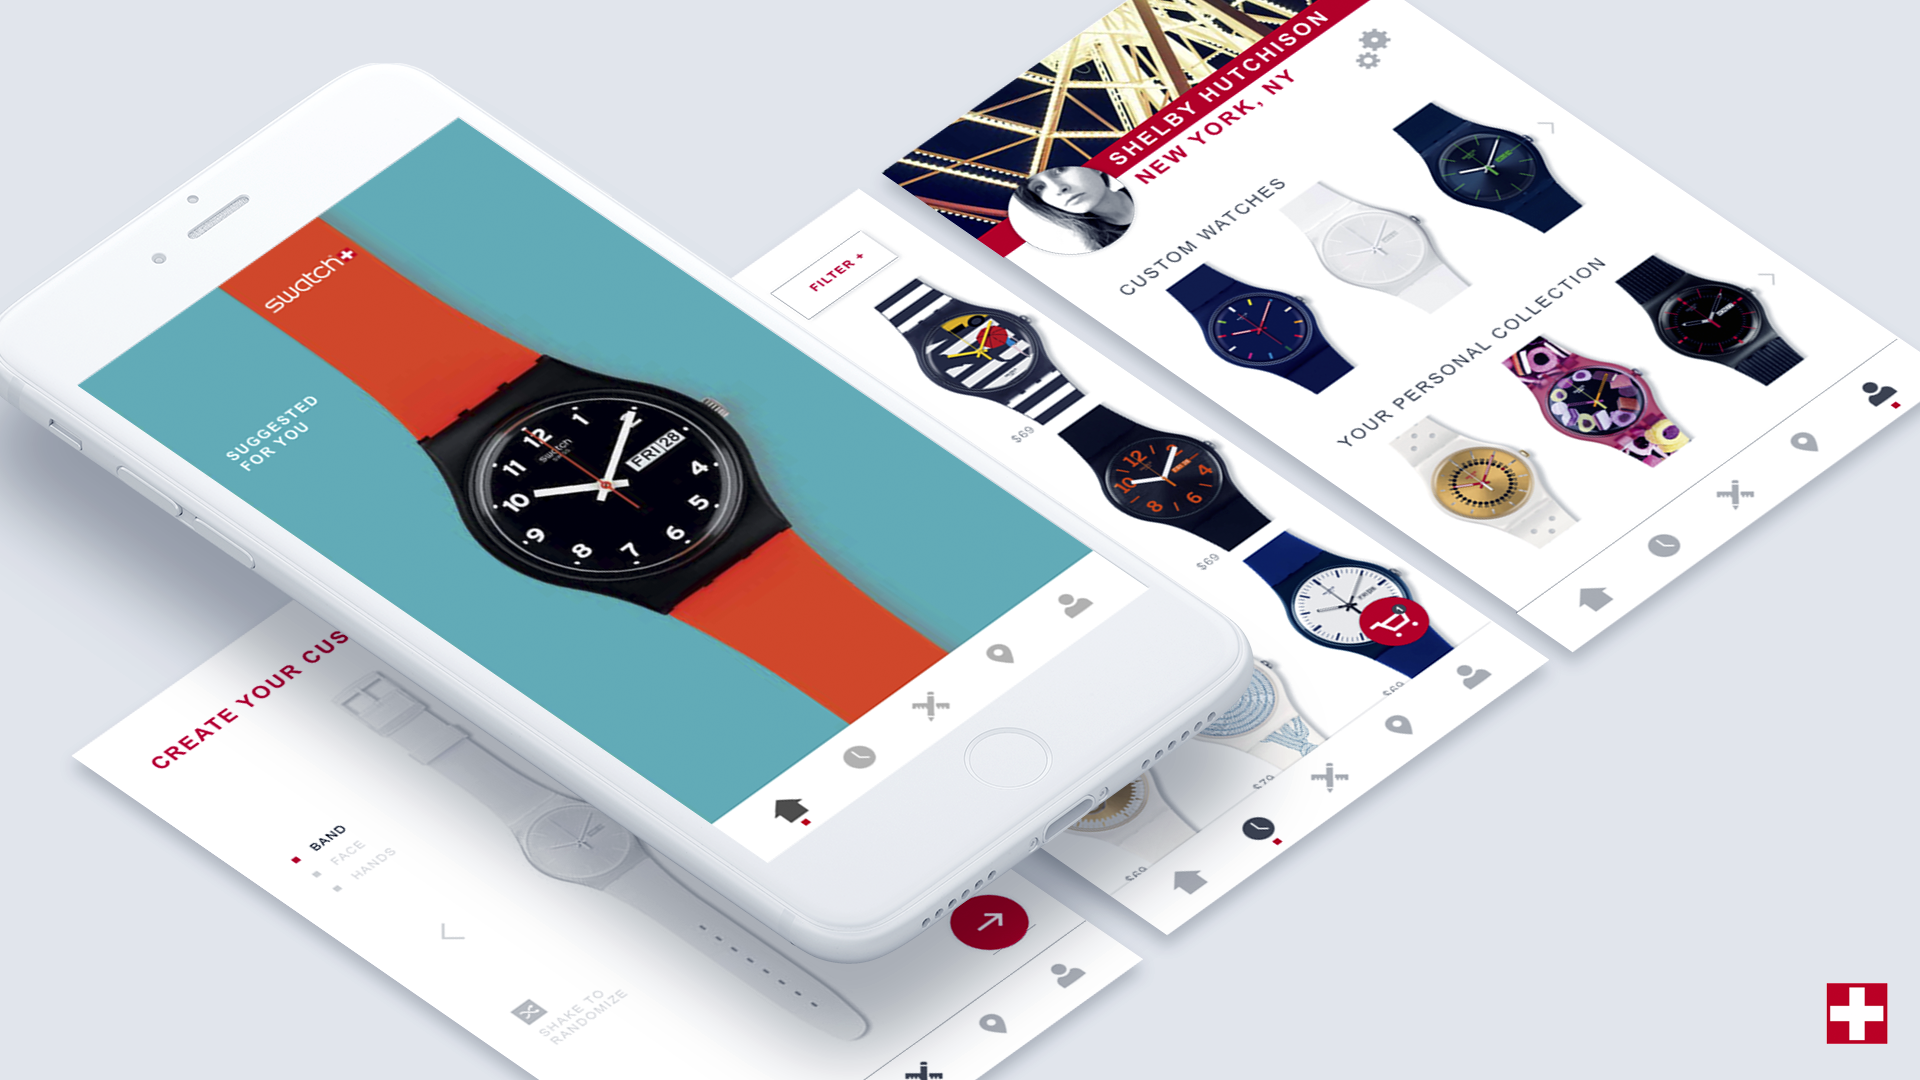 Swatch App Redesign